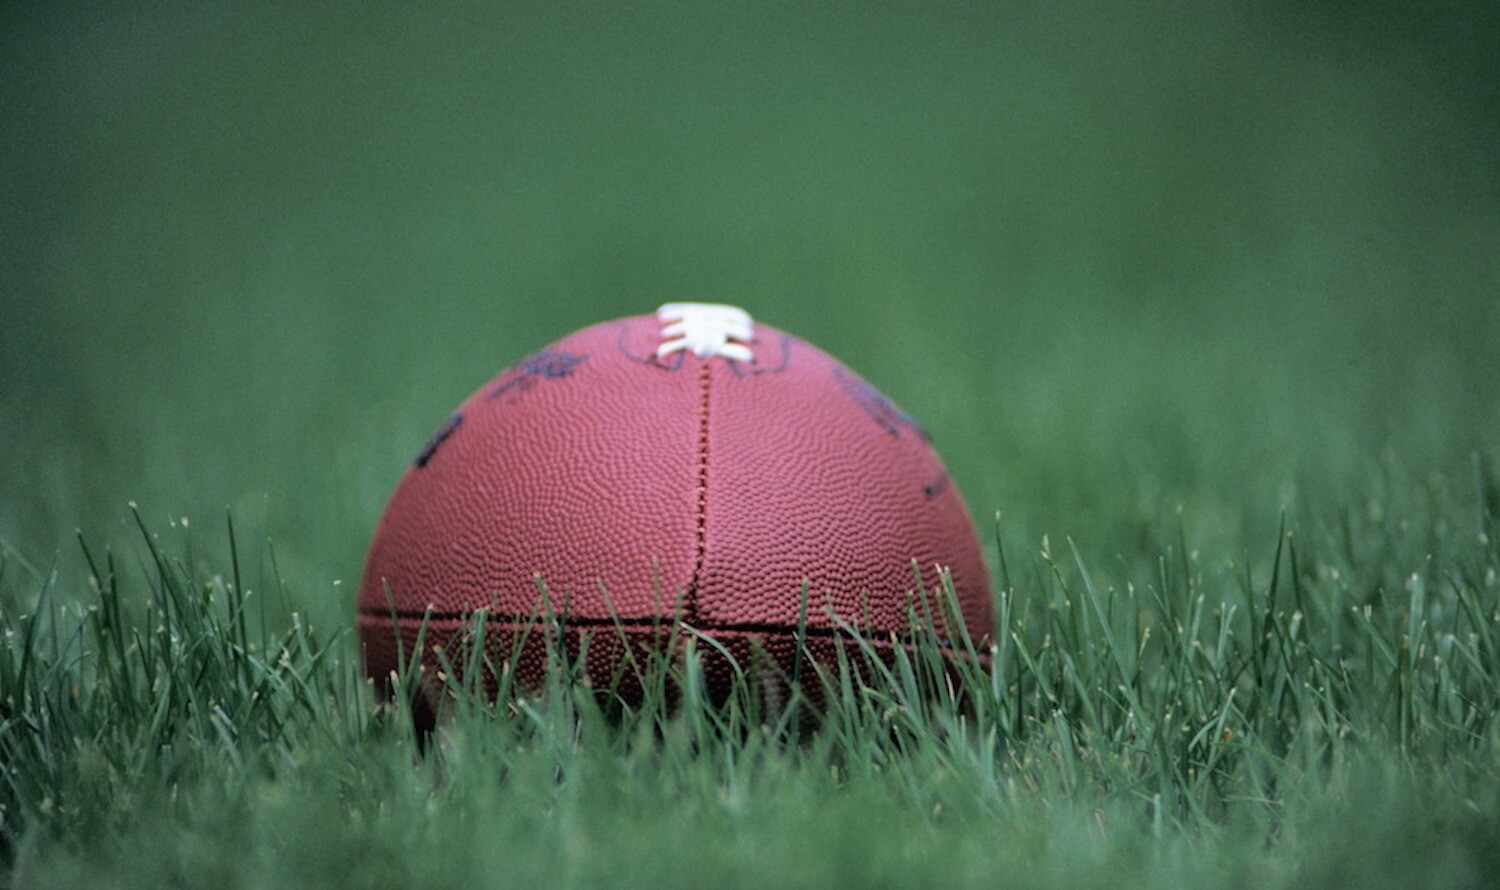 Close-up of a Football